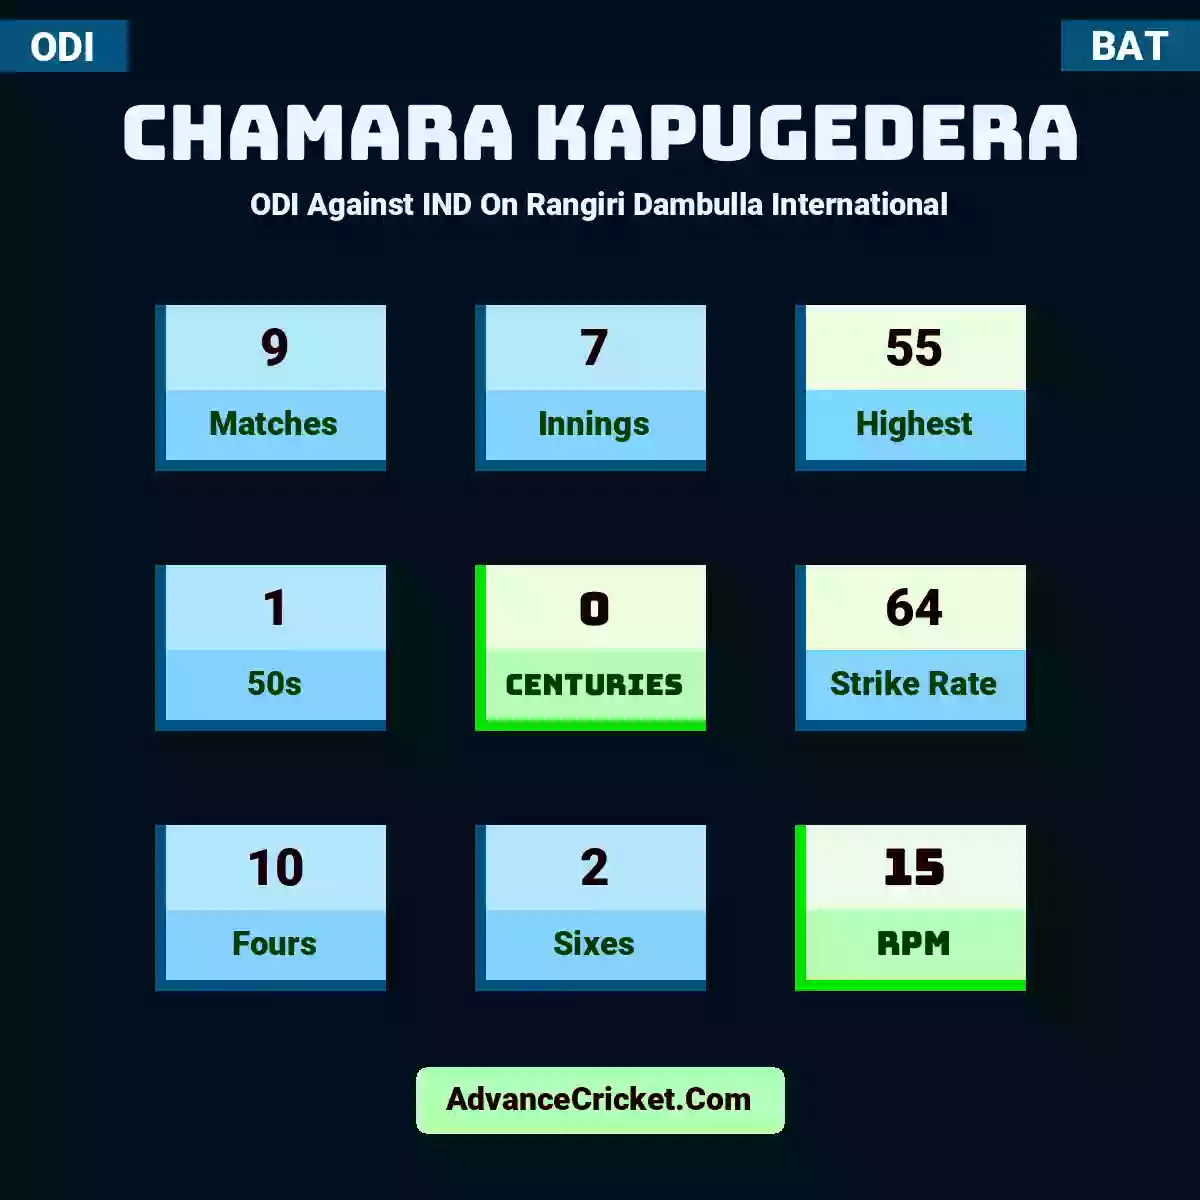 Chamara Kapugedera ODI  Against IND On Rangiri Dambulla International, Chamara Kapugedera played 9 matches, scored 55 runs as highest, 1 half-centuries, and 0 centuries, with a strike rate of 64. C.Kapugedera hit 10 fours and 2 sixes, with an RPM of 15.